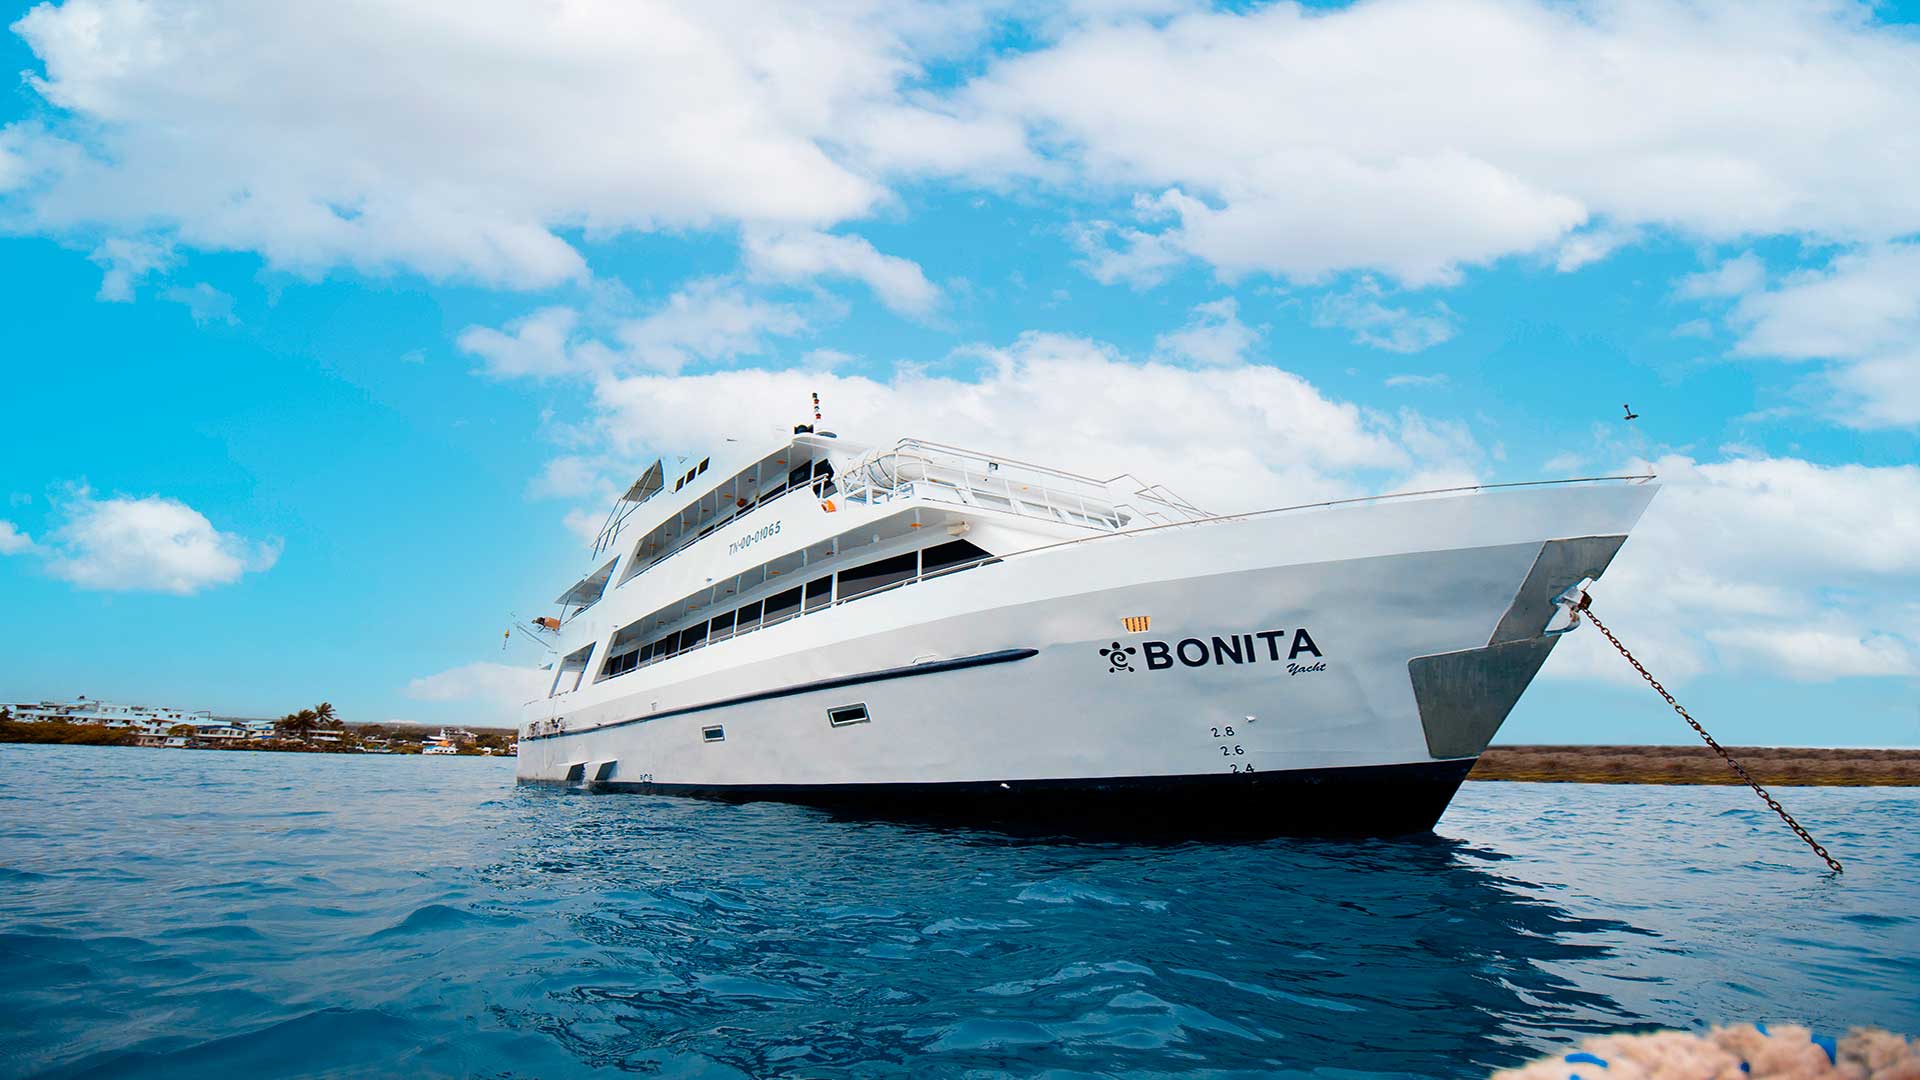 Bonita Yacht exterior - Galagents